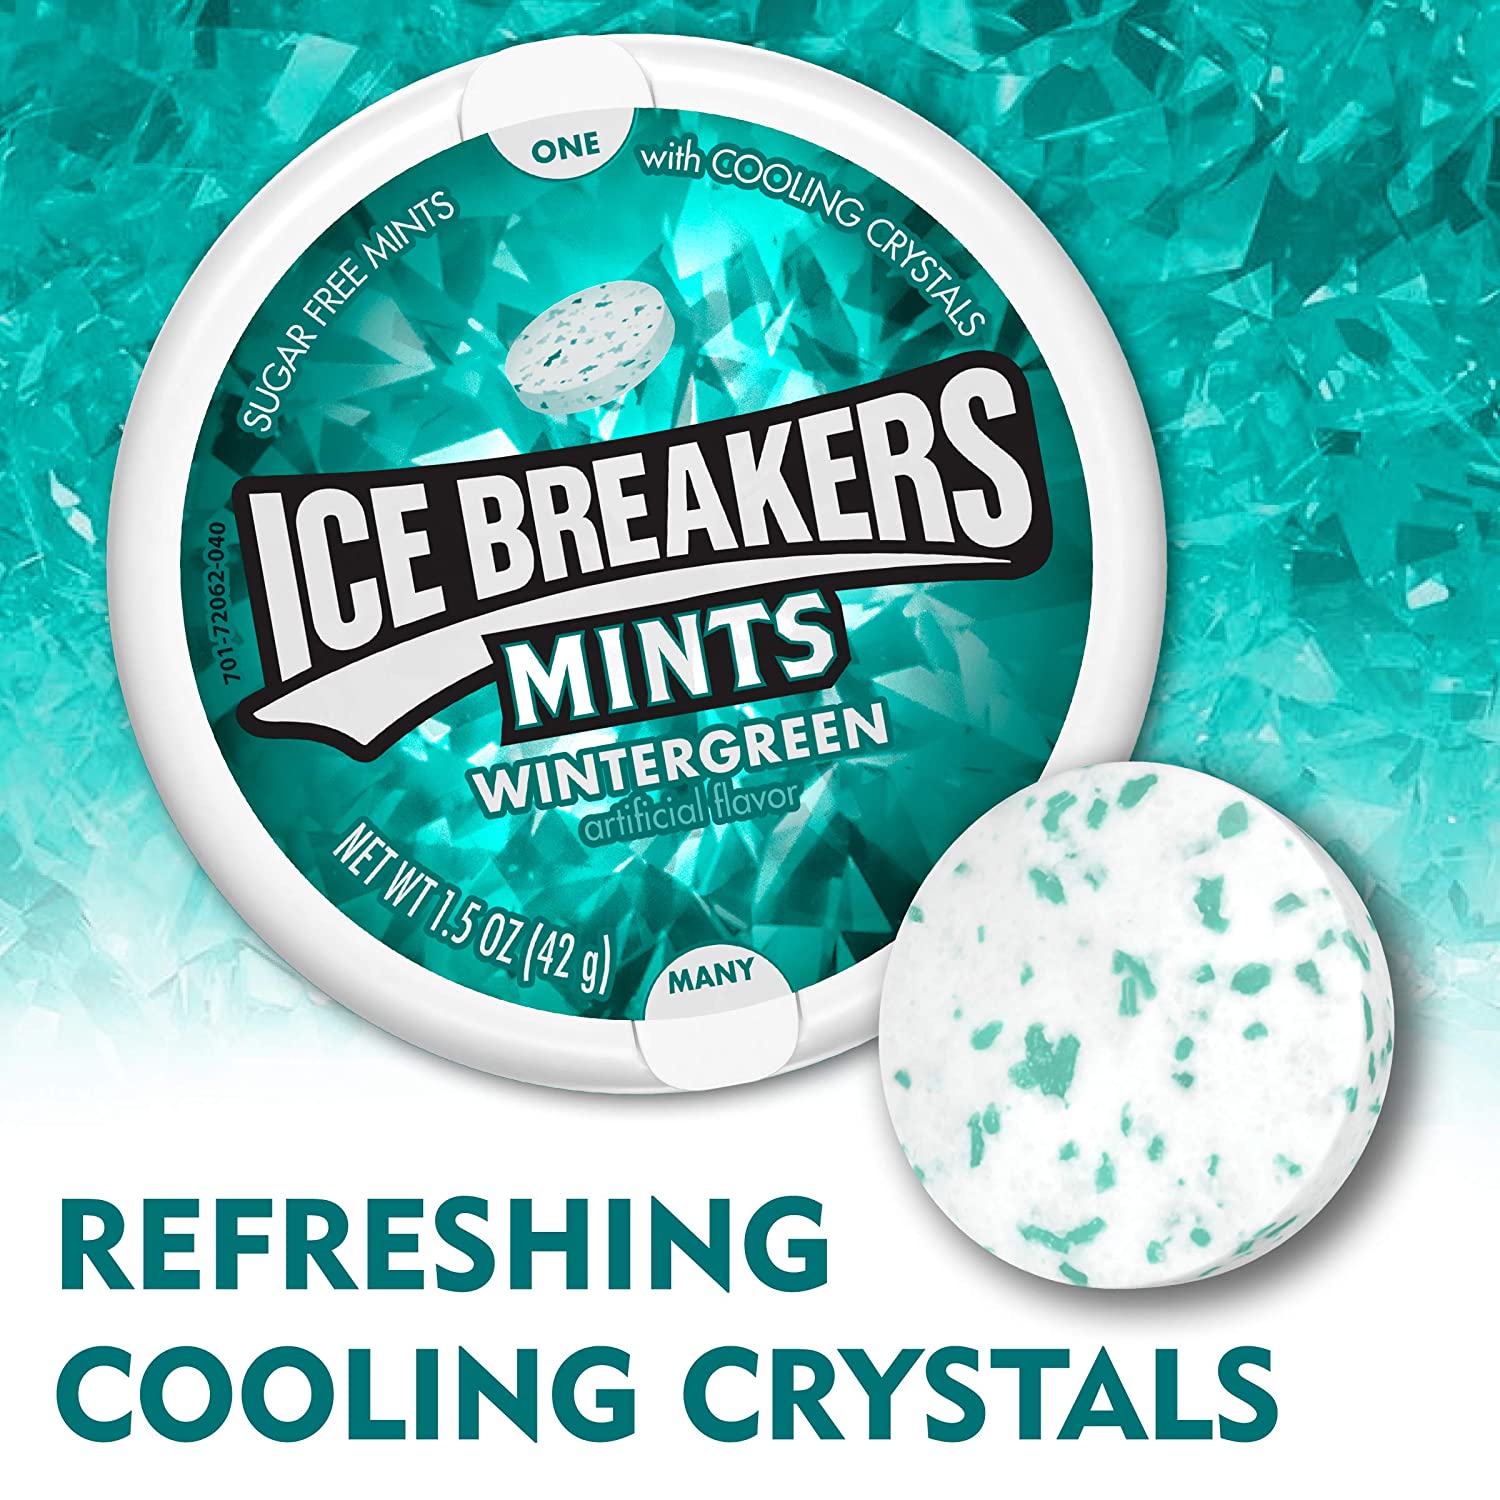 ICE BREAKERS WINTERGREEN - My American Shop